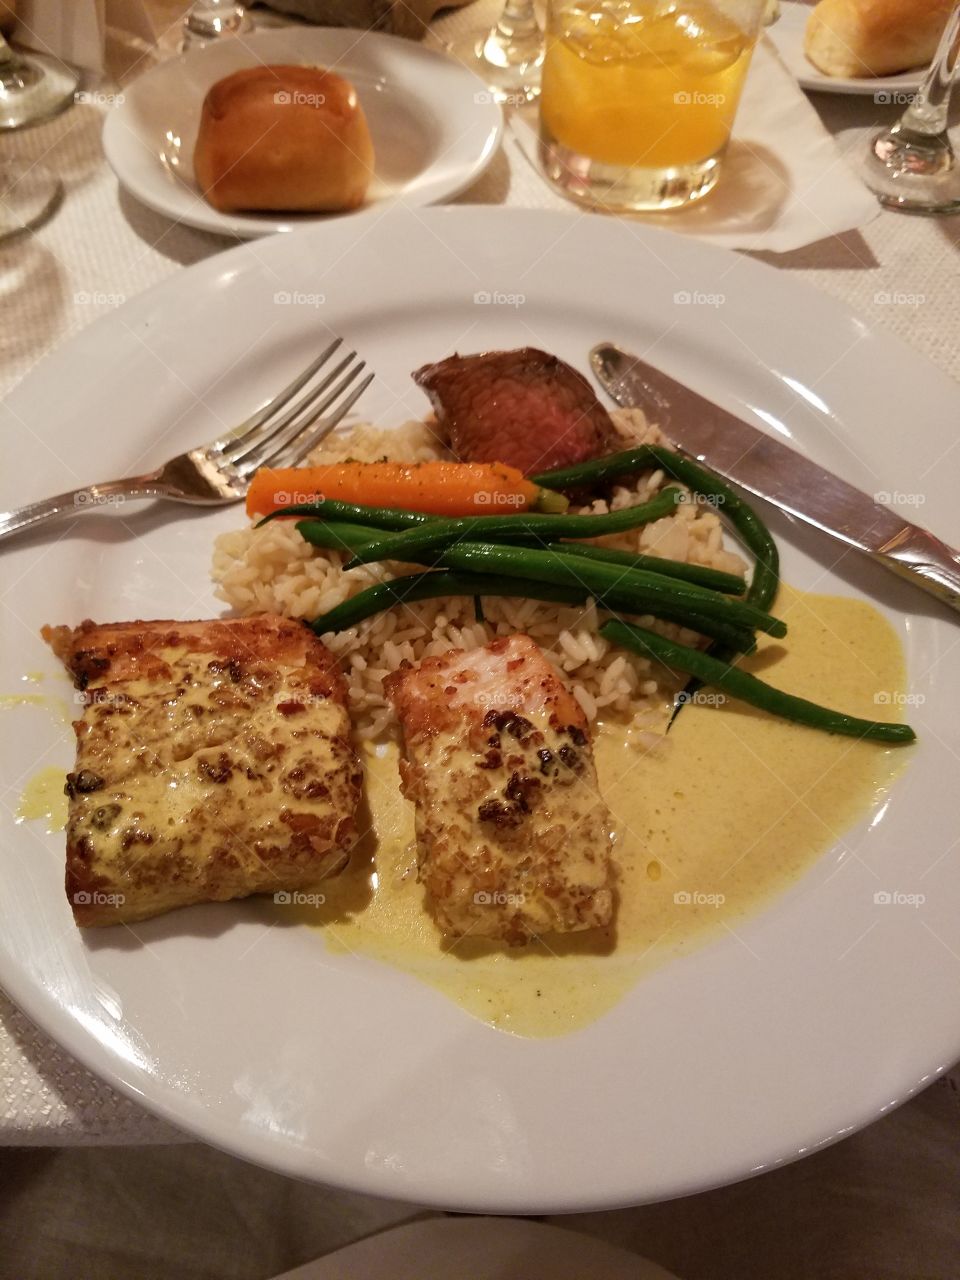 fish and steak dinner wedding stlye